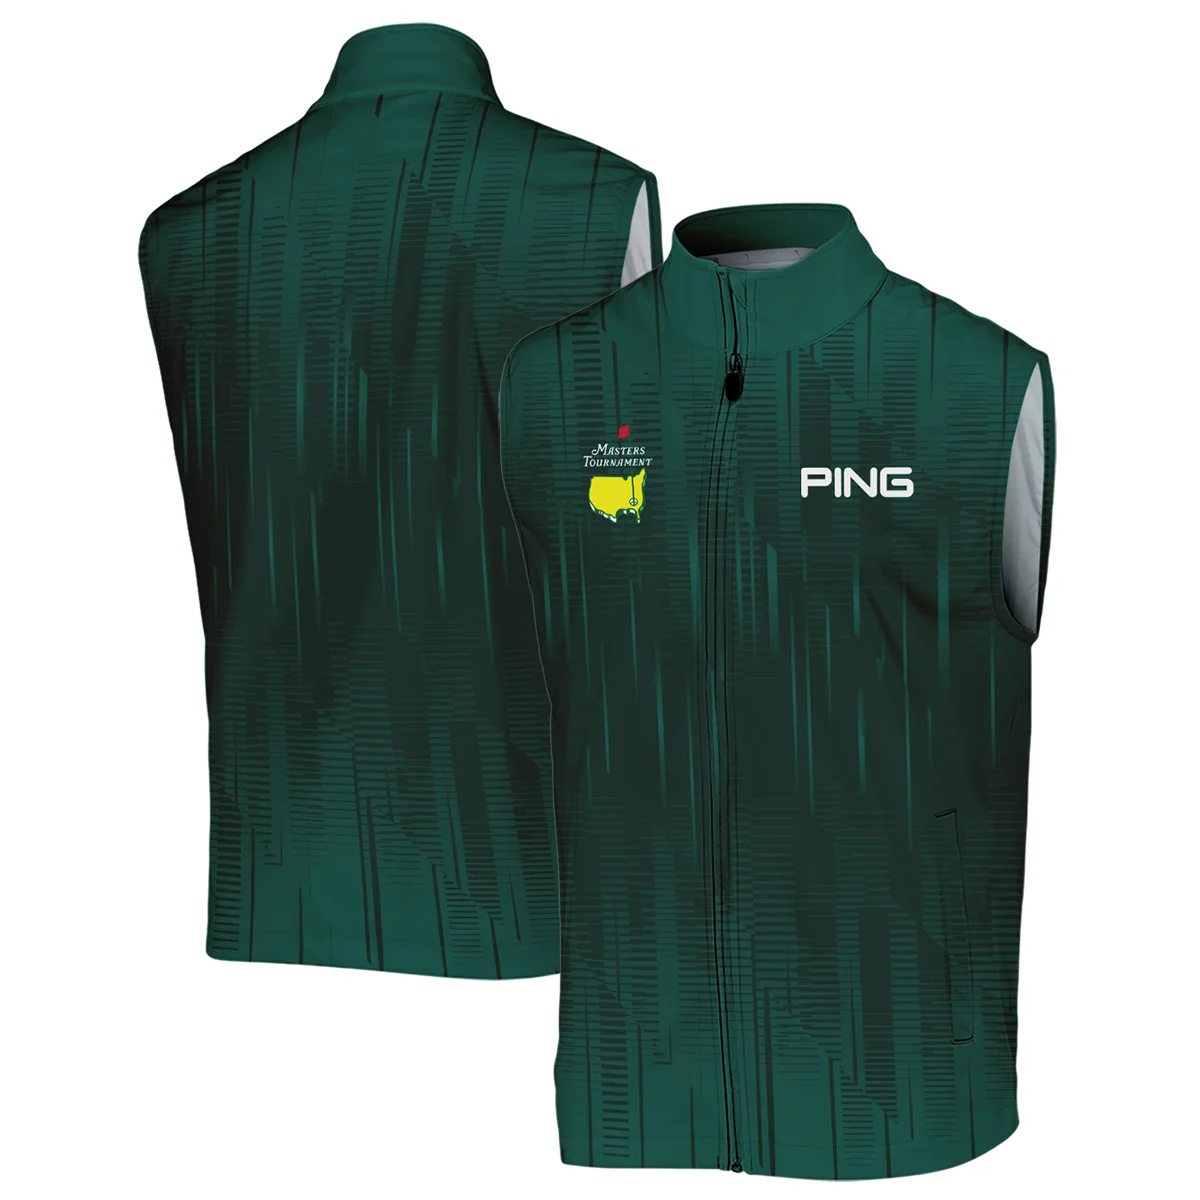 Masters Tournament Ping Dark Green Gradient Stripes Pattern Sleeveless Jacket Style Classic Sleeveless Jacket